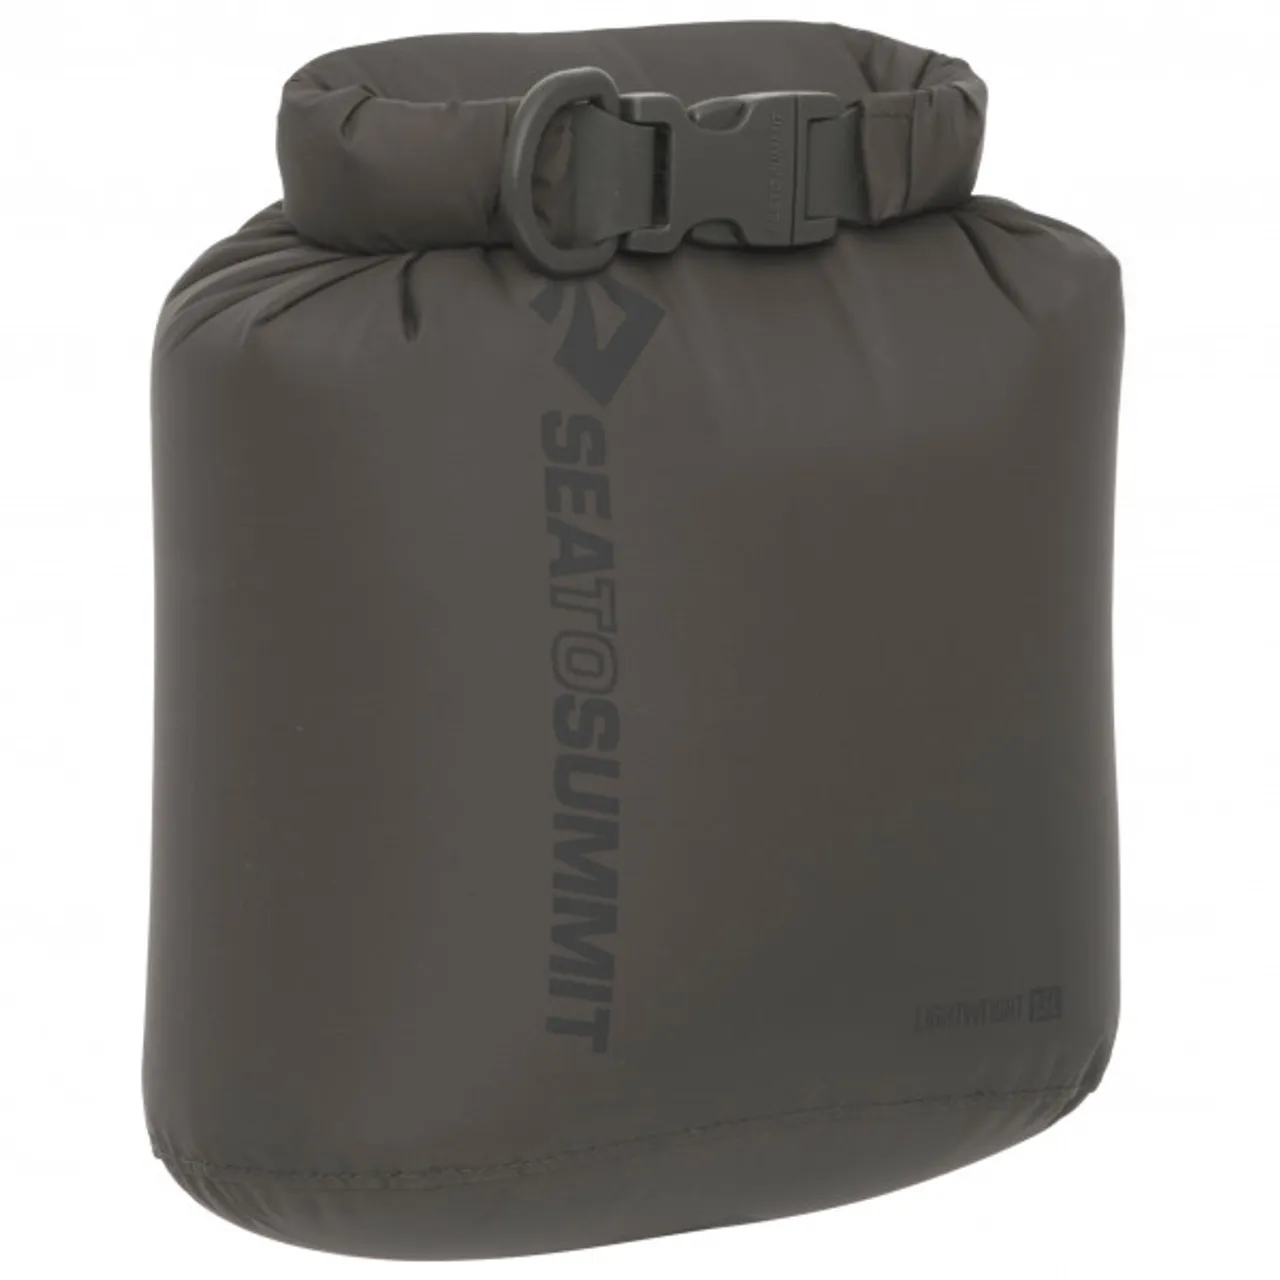 Sea to Summit - Lightweight Dry Bag - Packsack Gr 20 l braun/grau